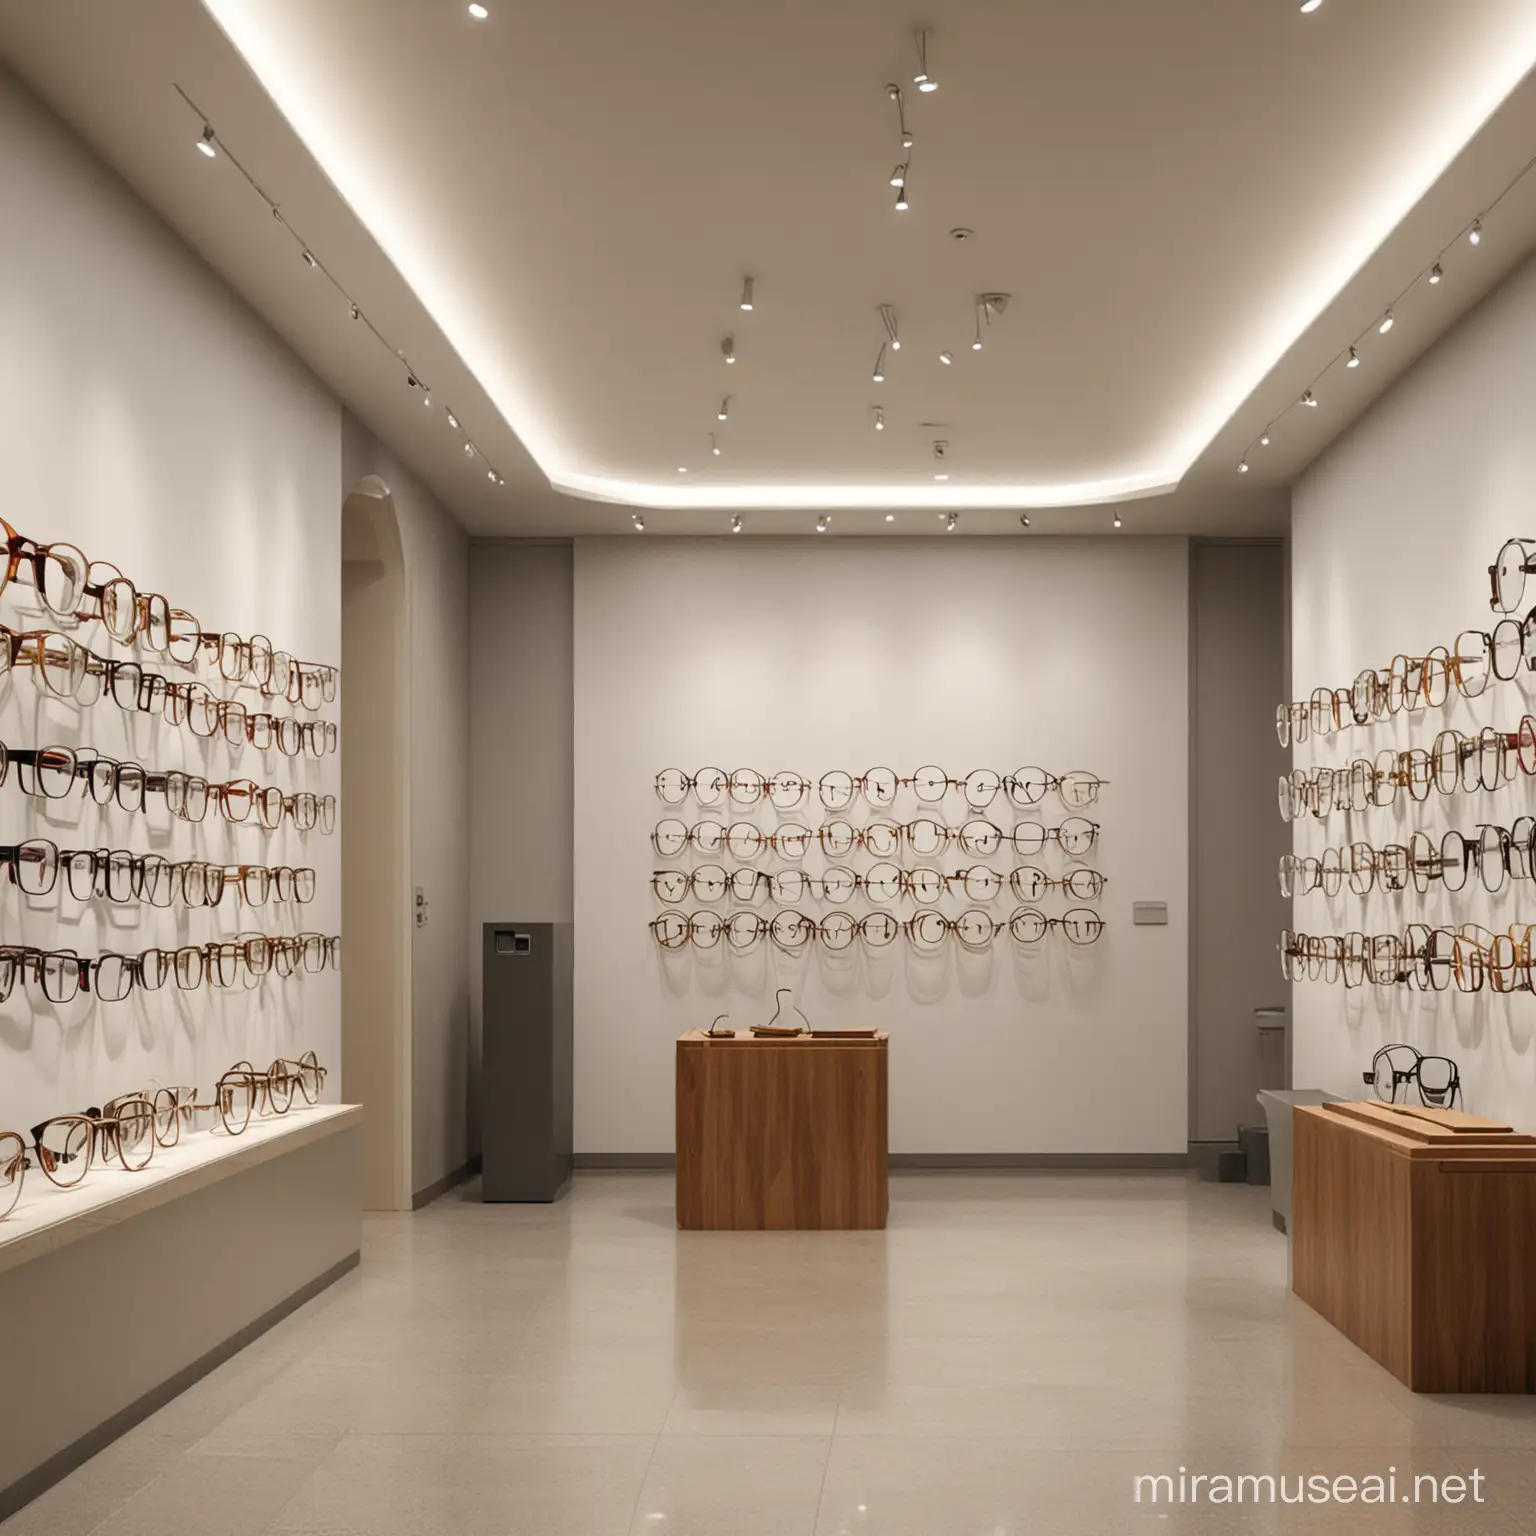 Innovative Eyeglasses Museum Lobby Design Featuring Interactive Displays